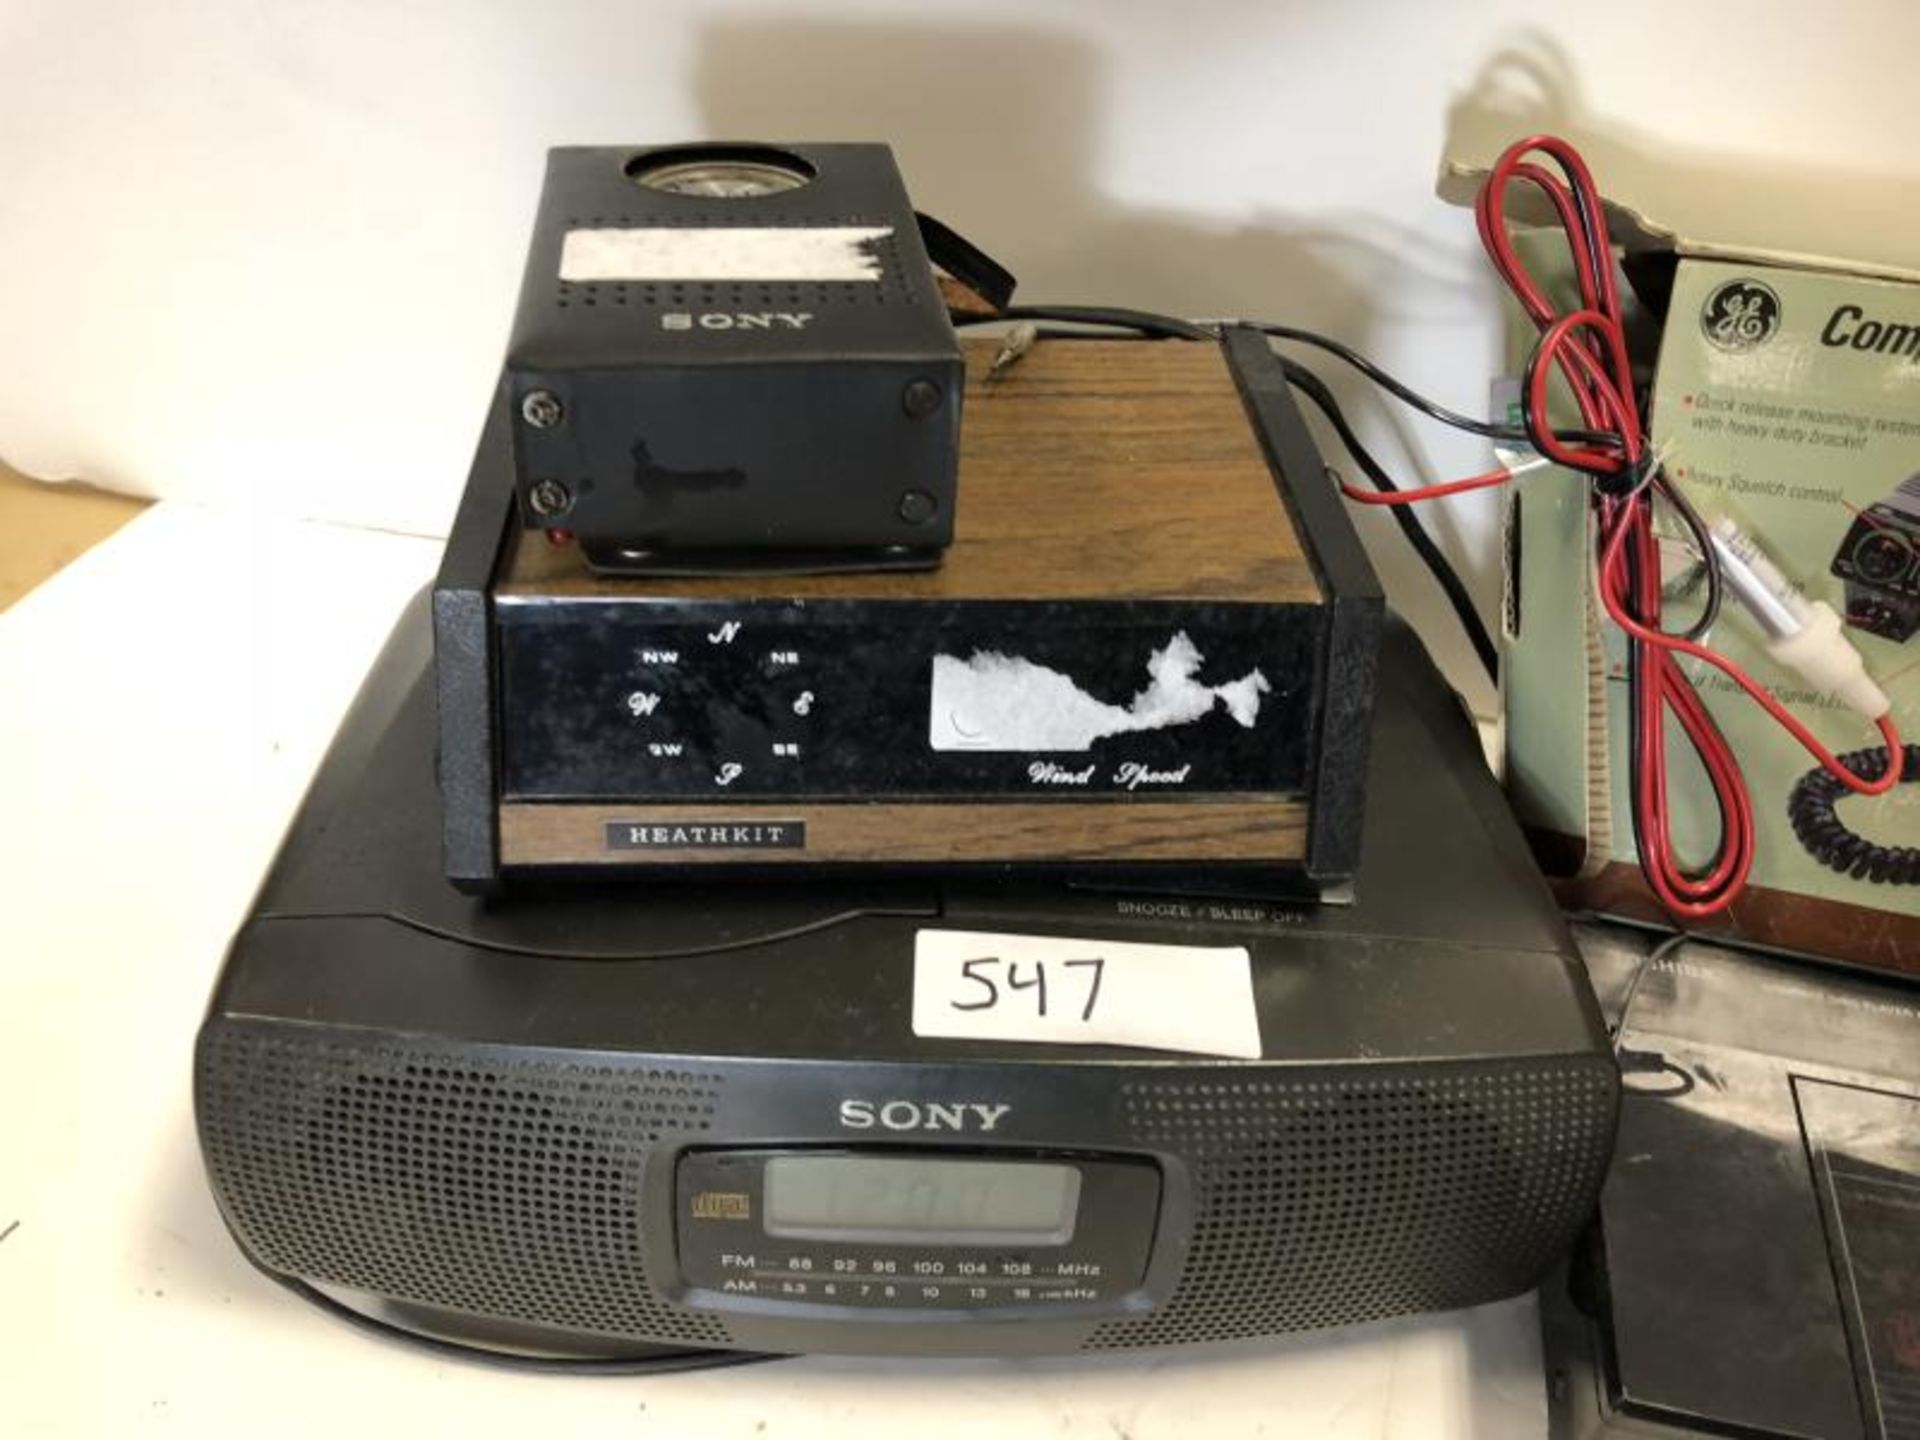 Lot - Sony alarm clock AM FM radio,Sony handheld radio, Toshiba compact disc player, Heathkit - Image 3 of 7